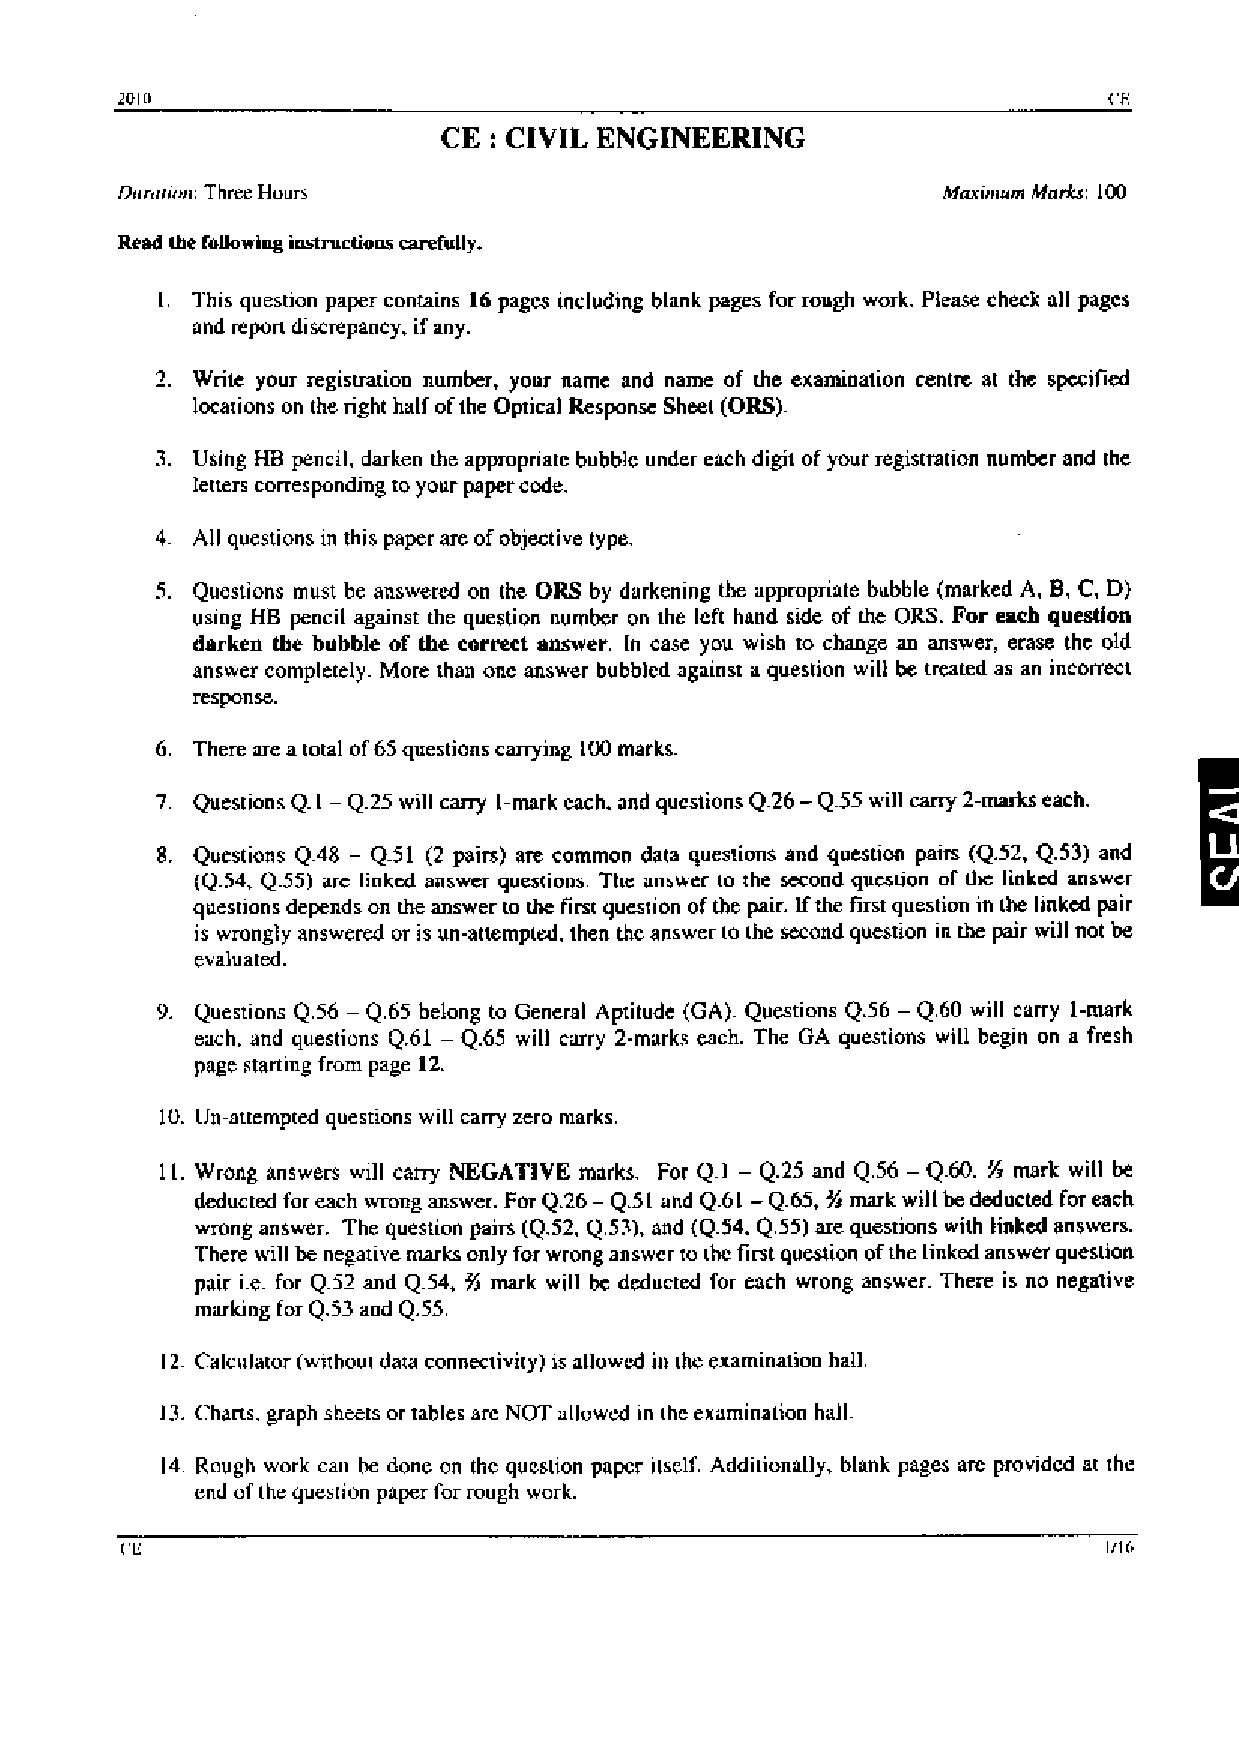 GATE Exam Question Paper 2010 Civil Engineering 1